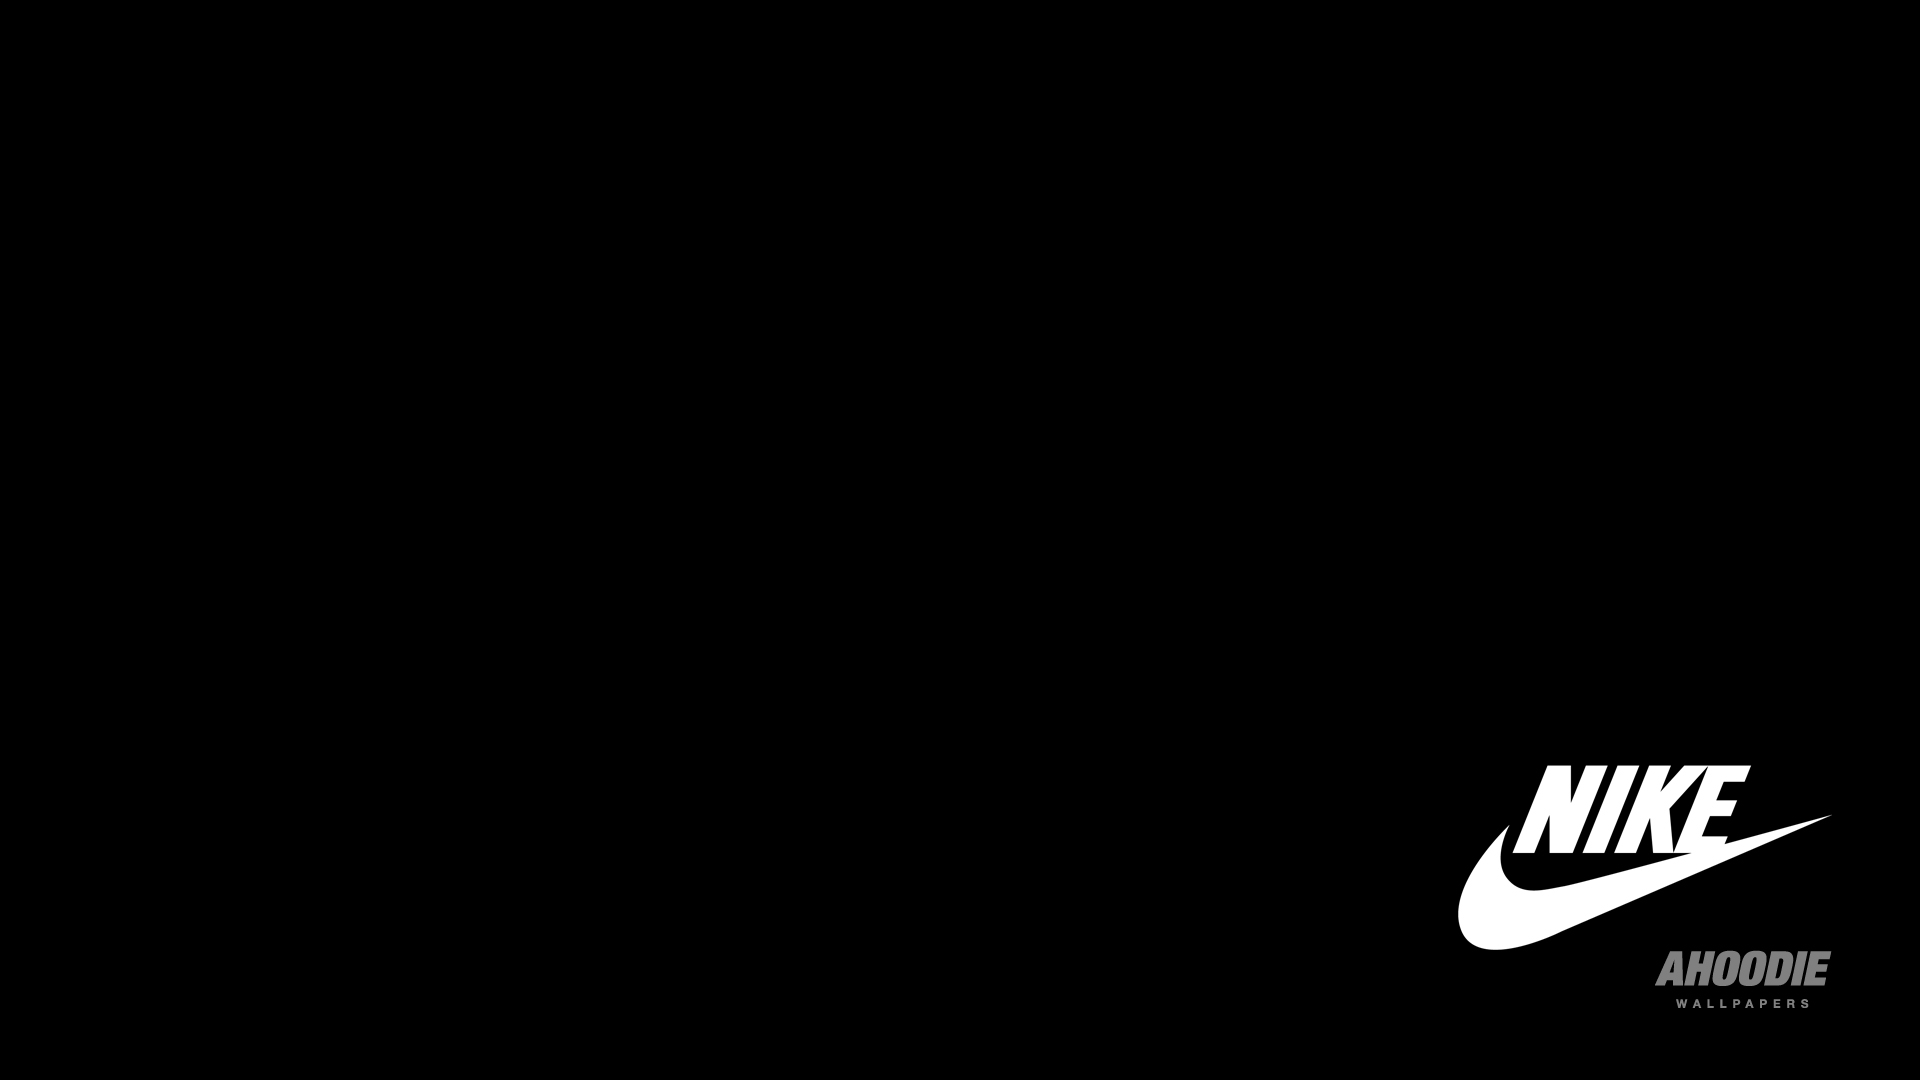 Free Download Nike Logo Black Wallpapers Iphone Desktop Backgrounds For Hd 1920x1080 For Your Desktop Mobile Tablet Explore 72 Nike Symbol Wallpaper Bat Symbol Wallpaper Cool Nike Wallpapers Superman Symbol Wallpaper